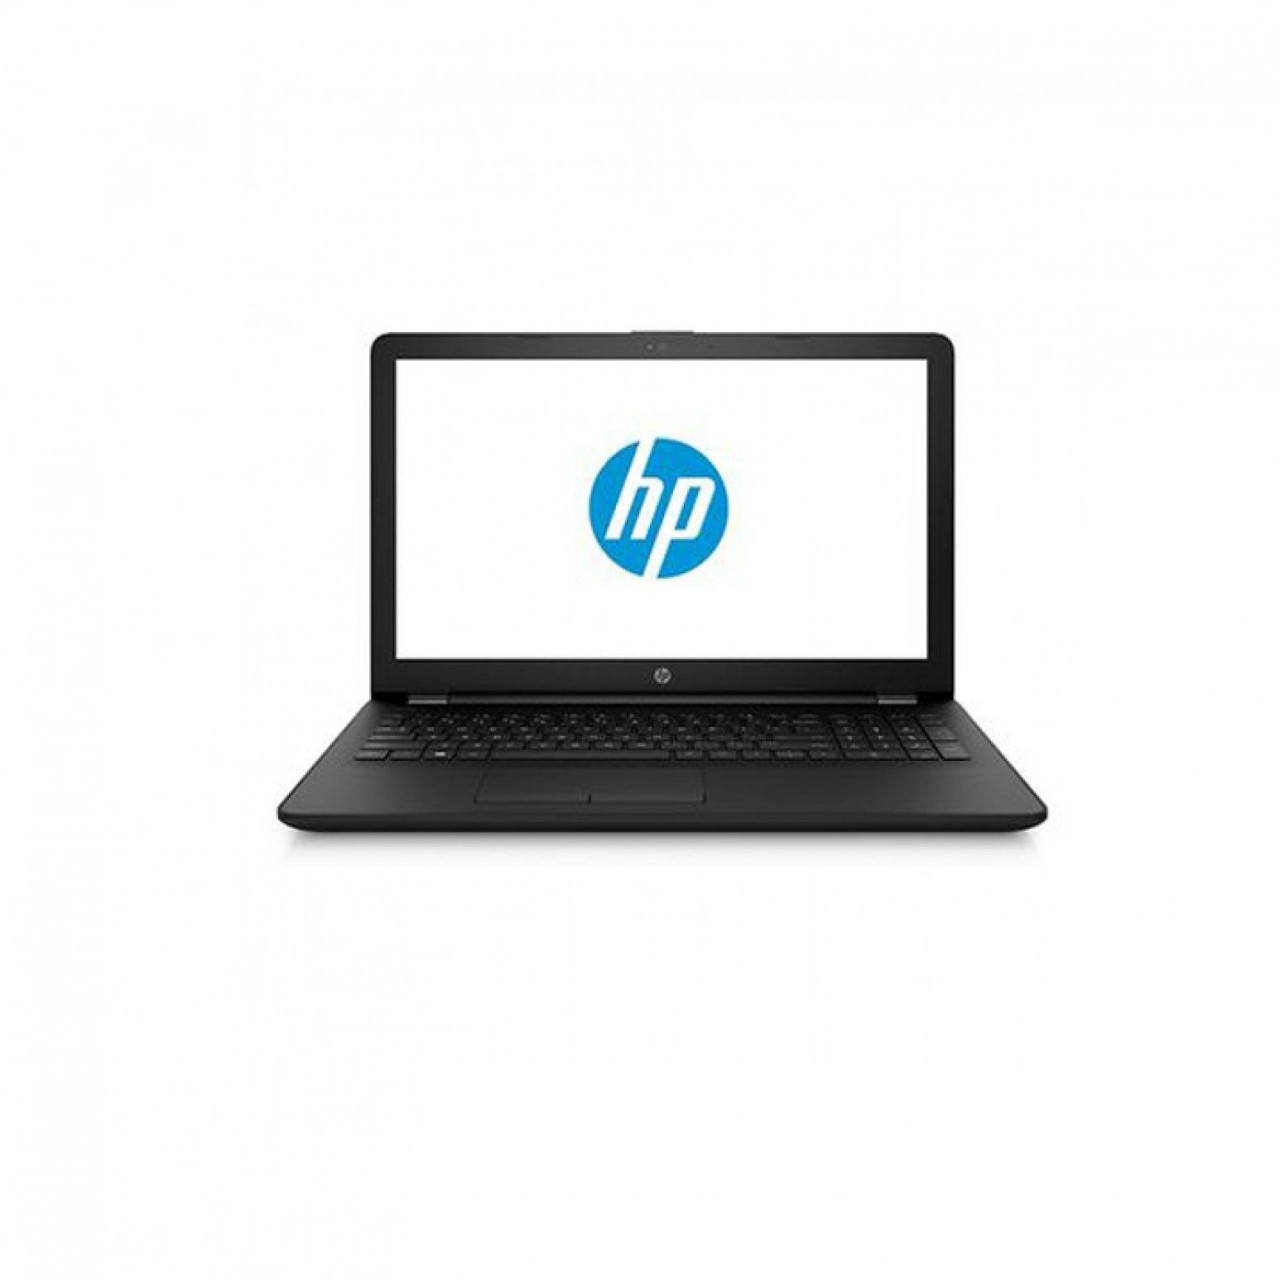 HP CELRON N4000 15 Laptop-DA0343 - 4GB RAM -  500GB Storage -  15.6" HD Display -  DVD RW DOS